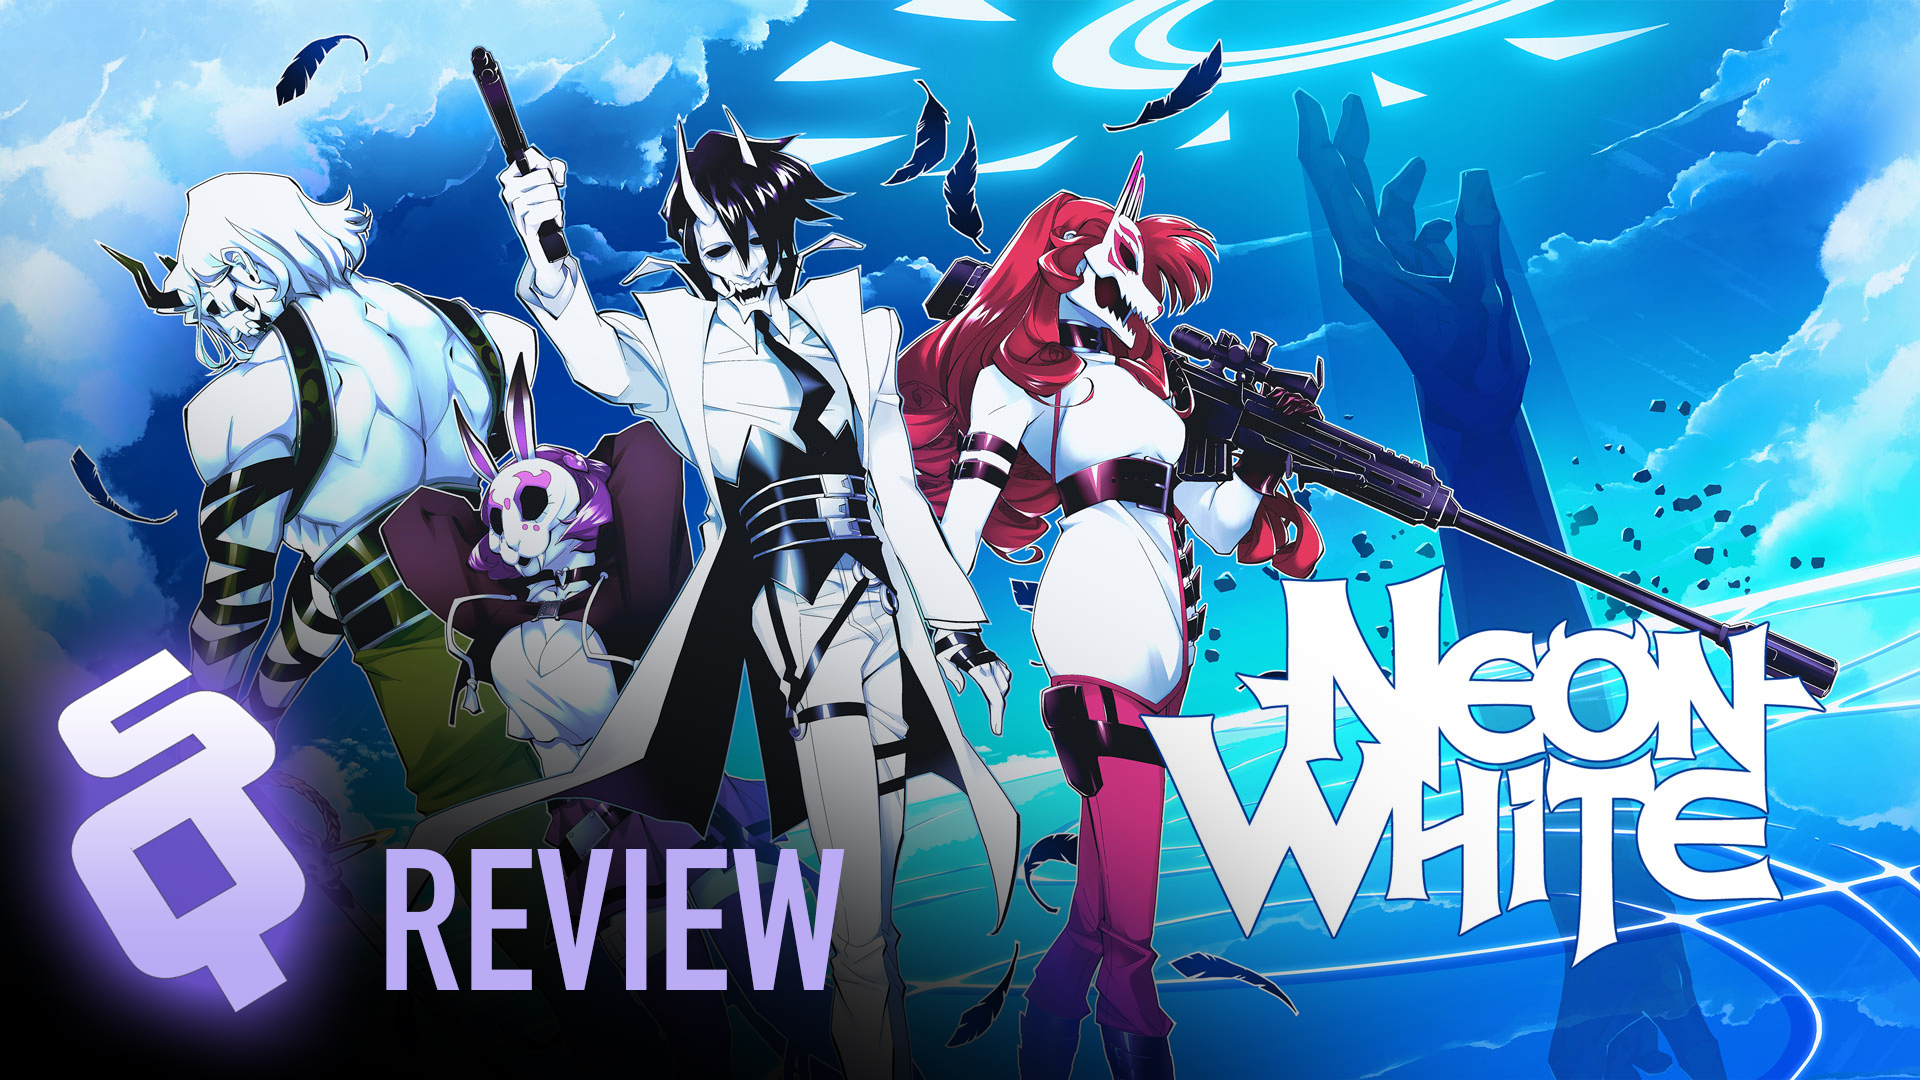 Review: Neon White